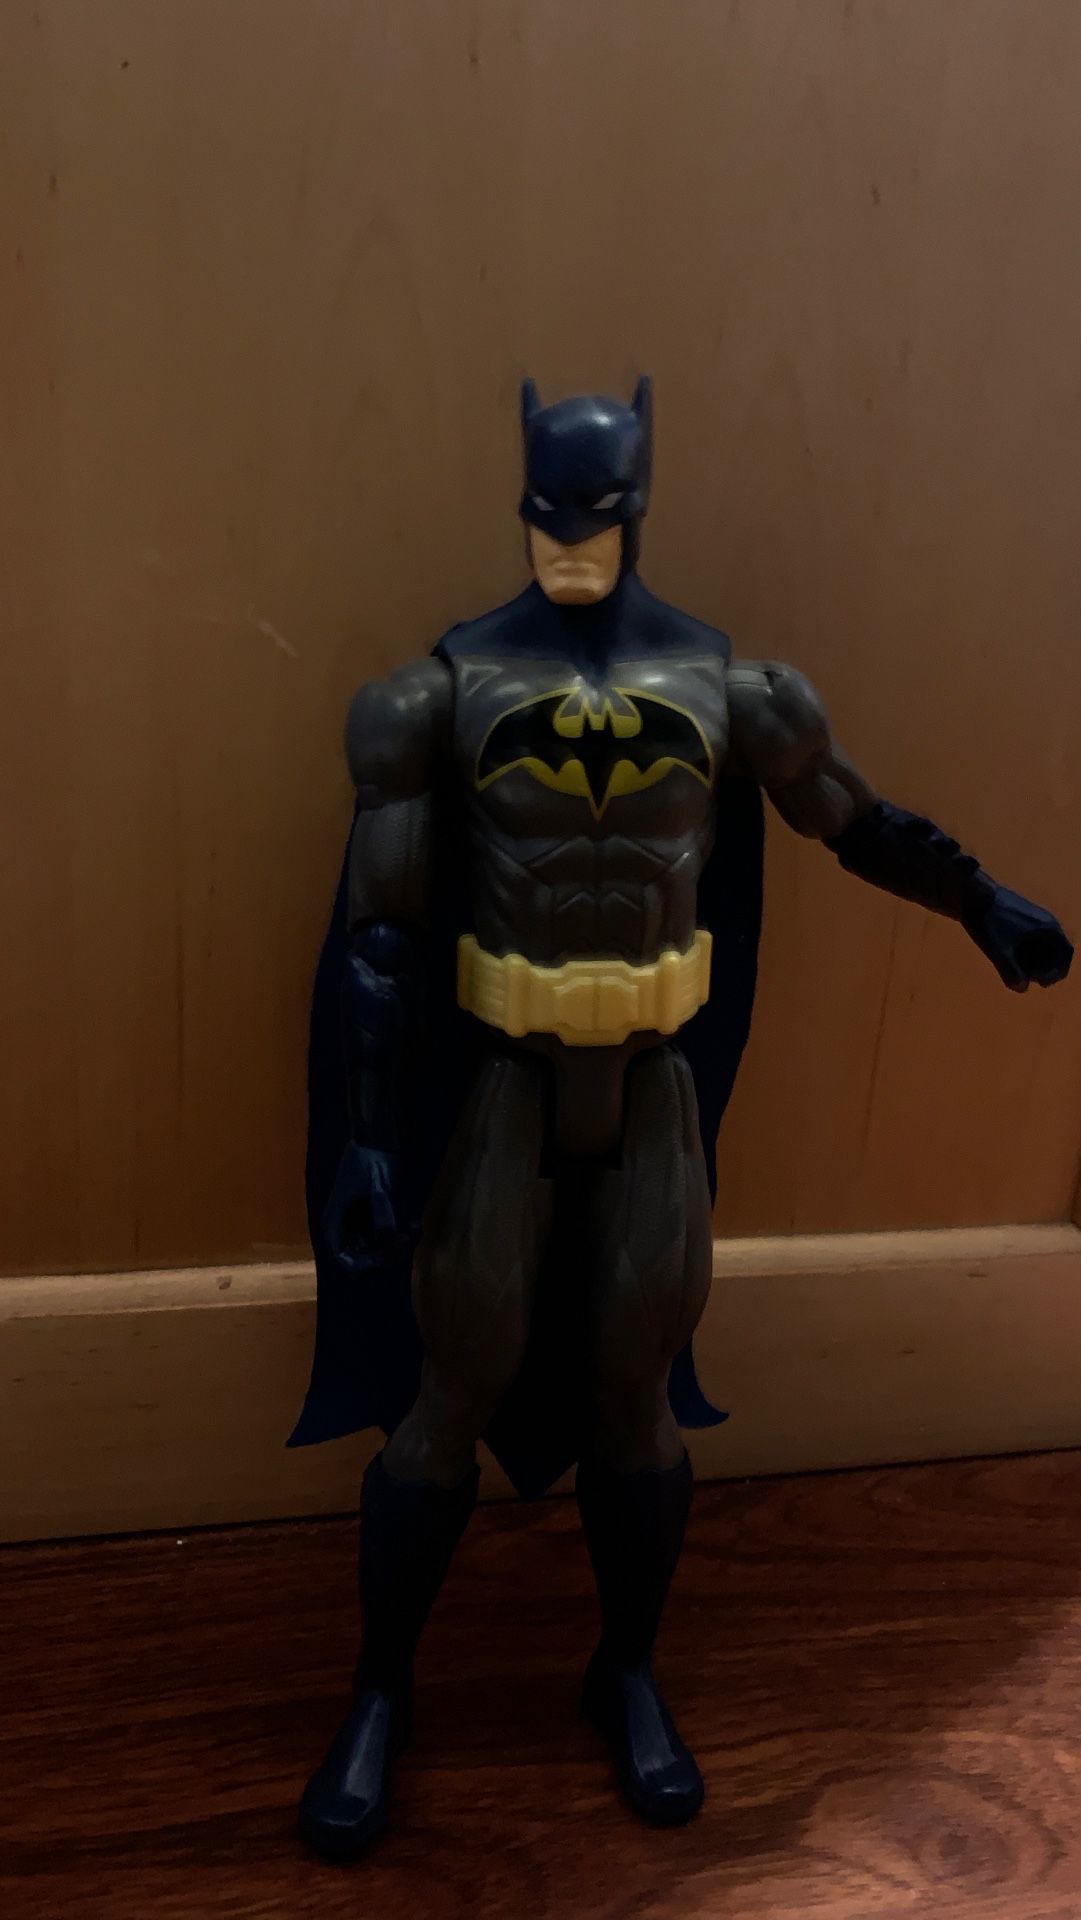 Brand new Batman figure